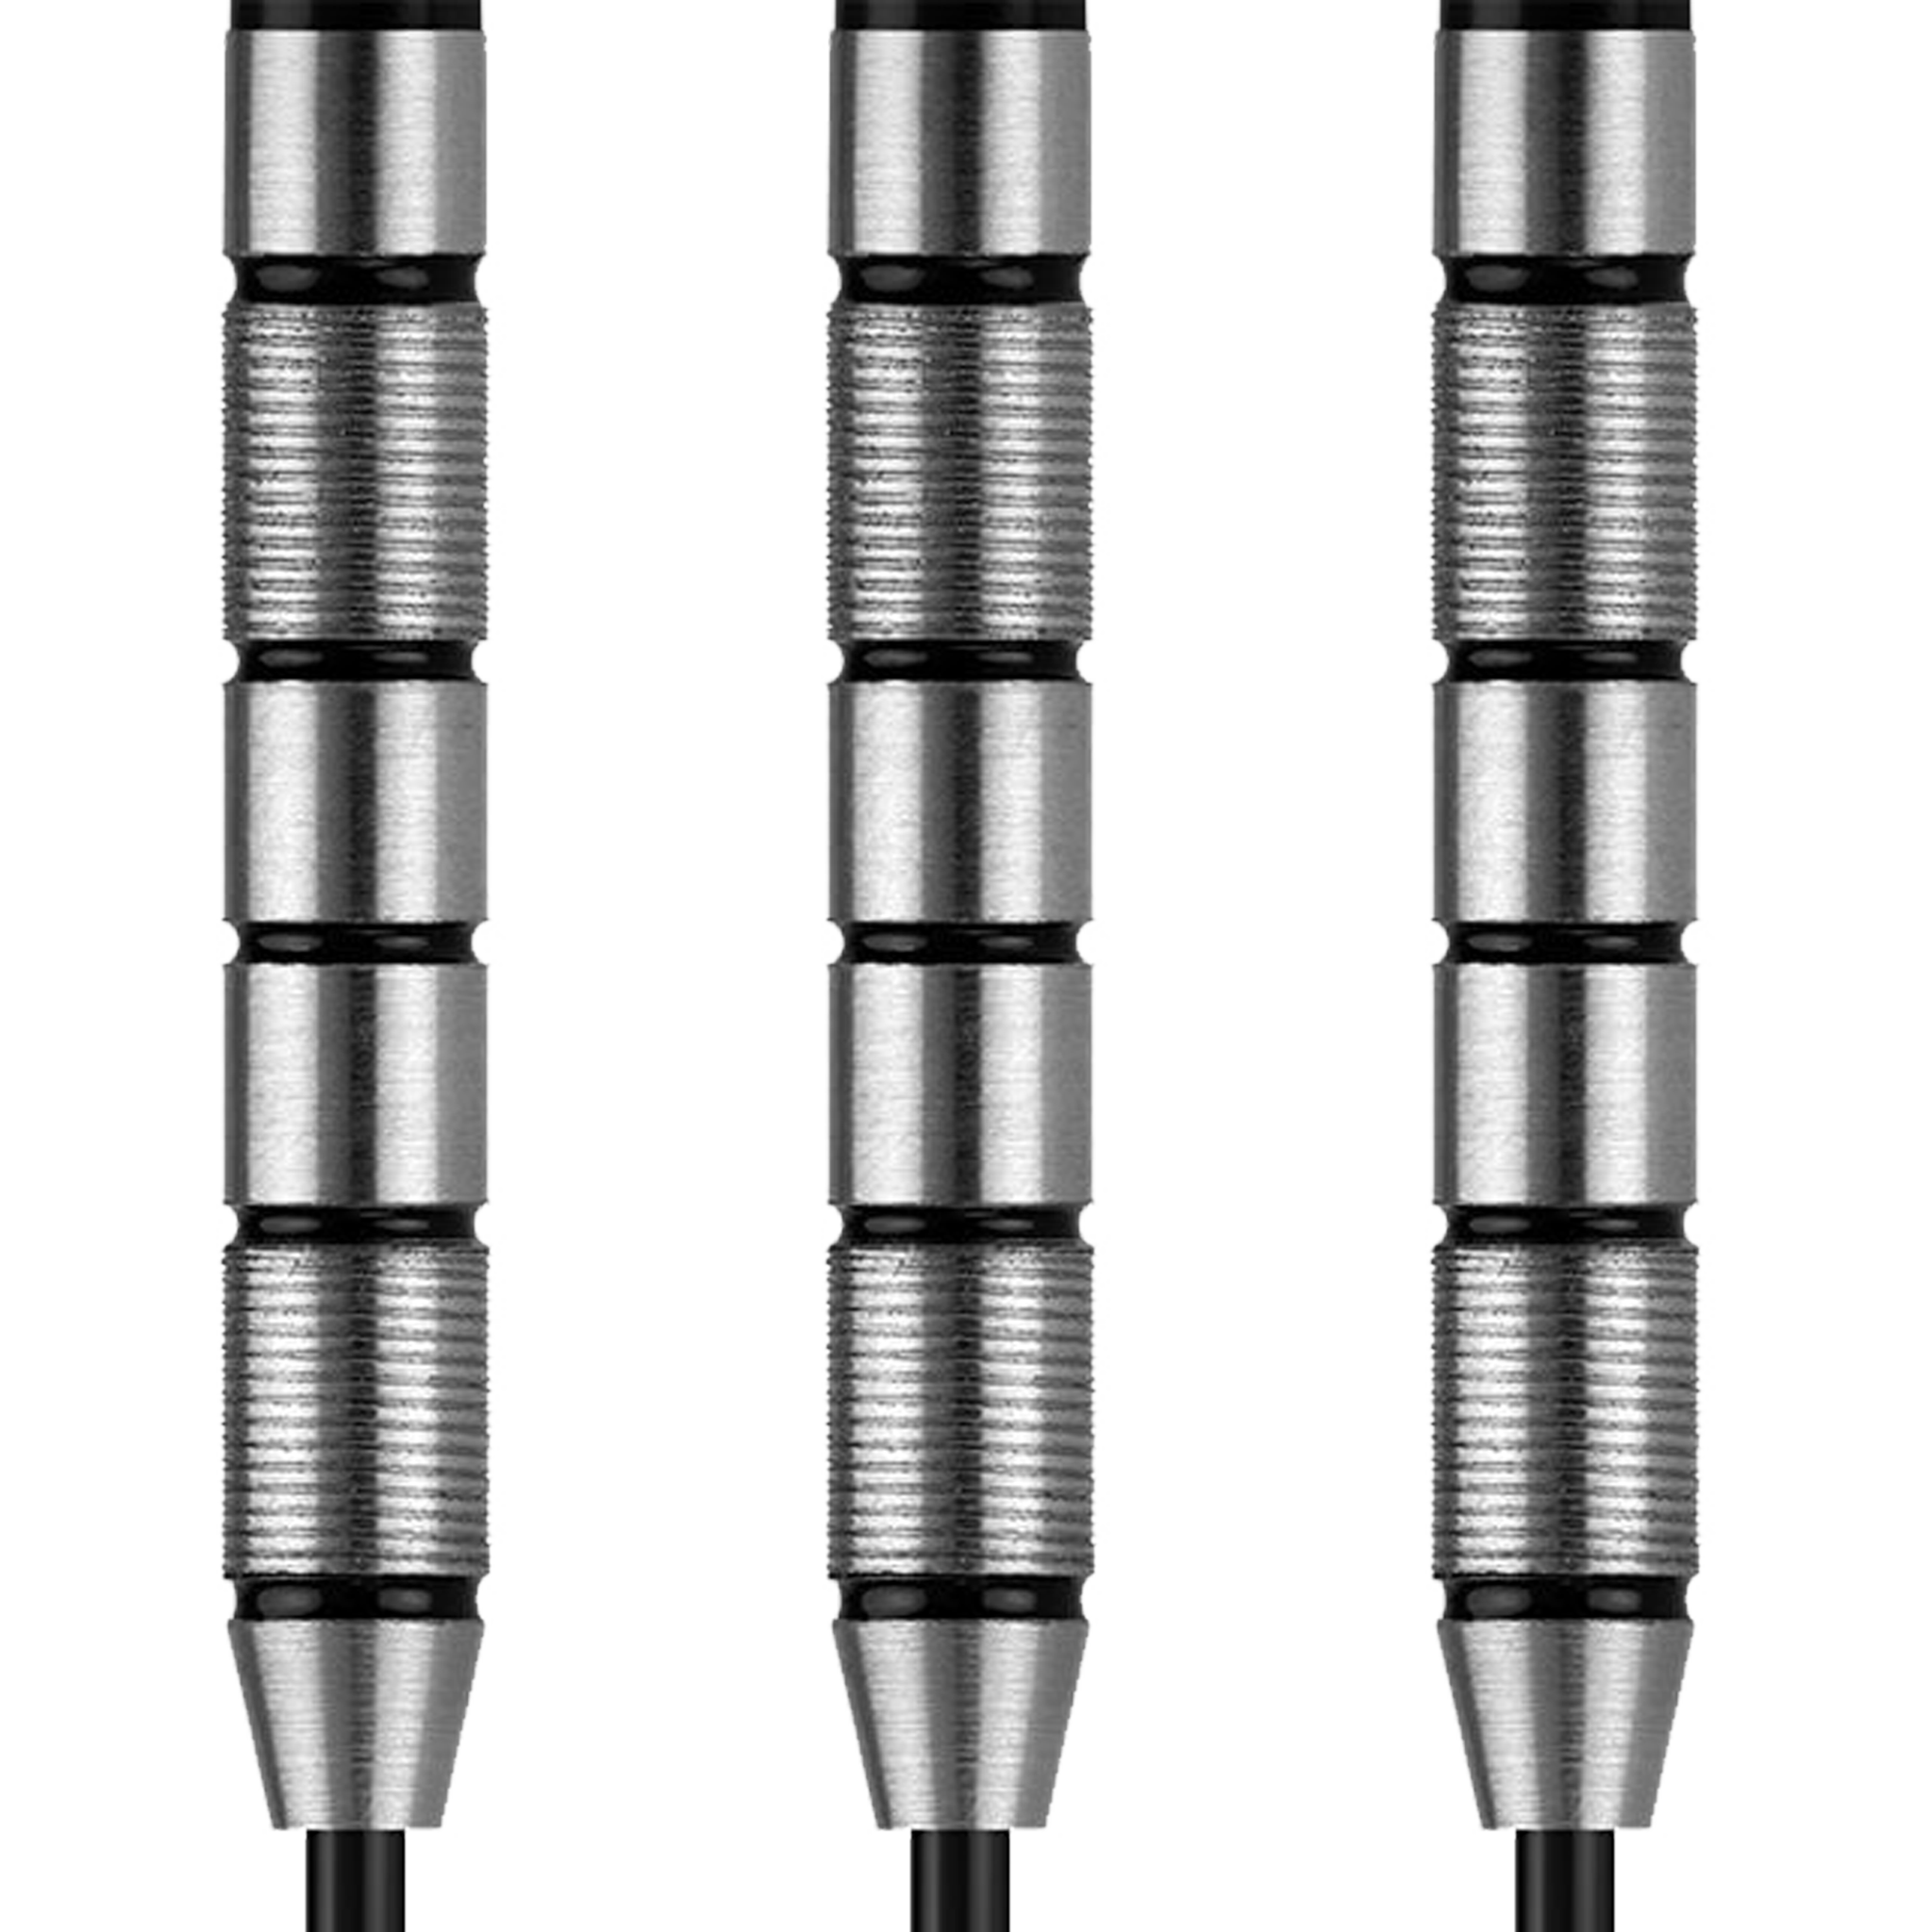 Designa Ultralites V2 M1 Steel Tip Darts - 80% Tungsten - 18 Grams Darts